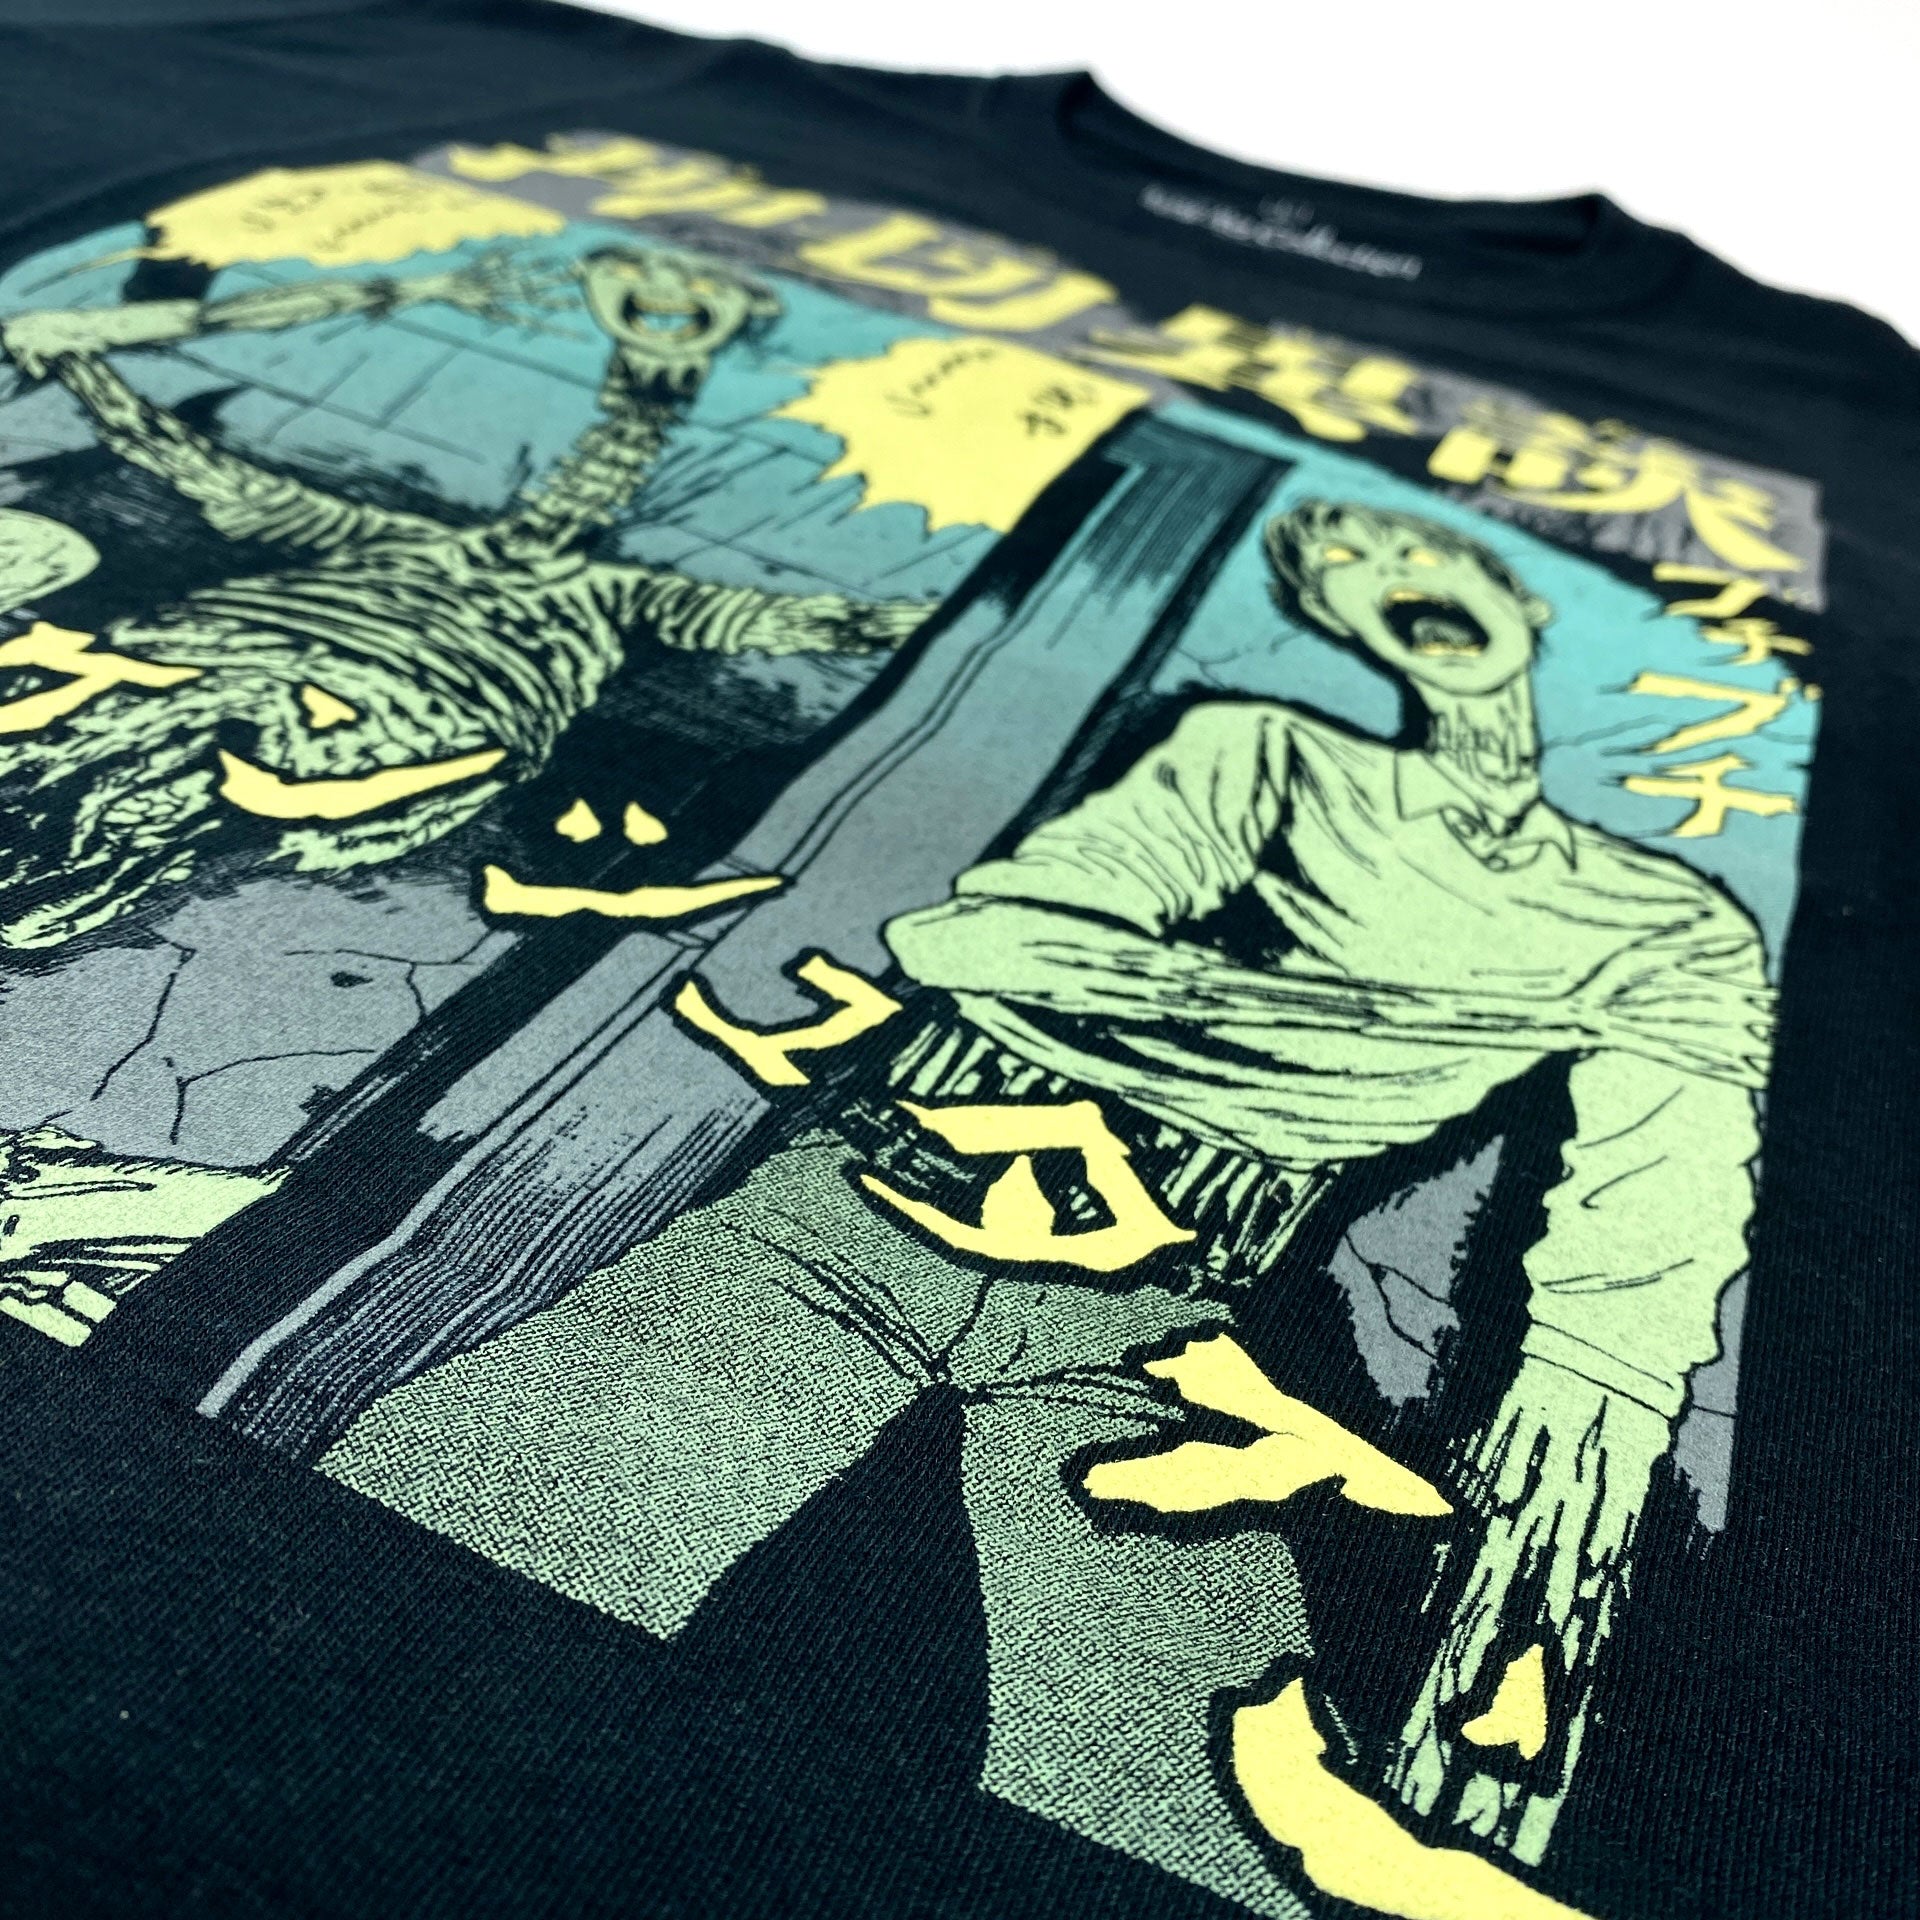 Junji Ito - Frankenstein Panel T-Shirt - Crunchyroll Exclusive! image count 1